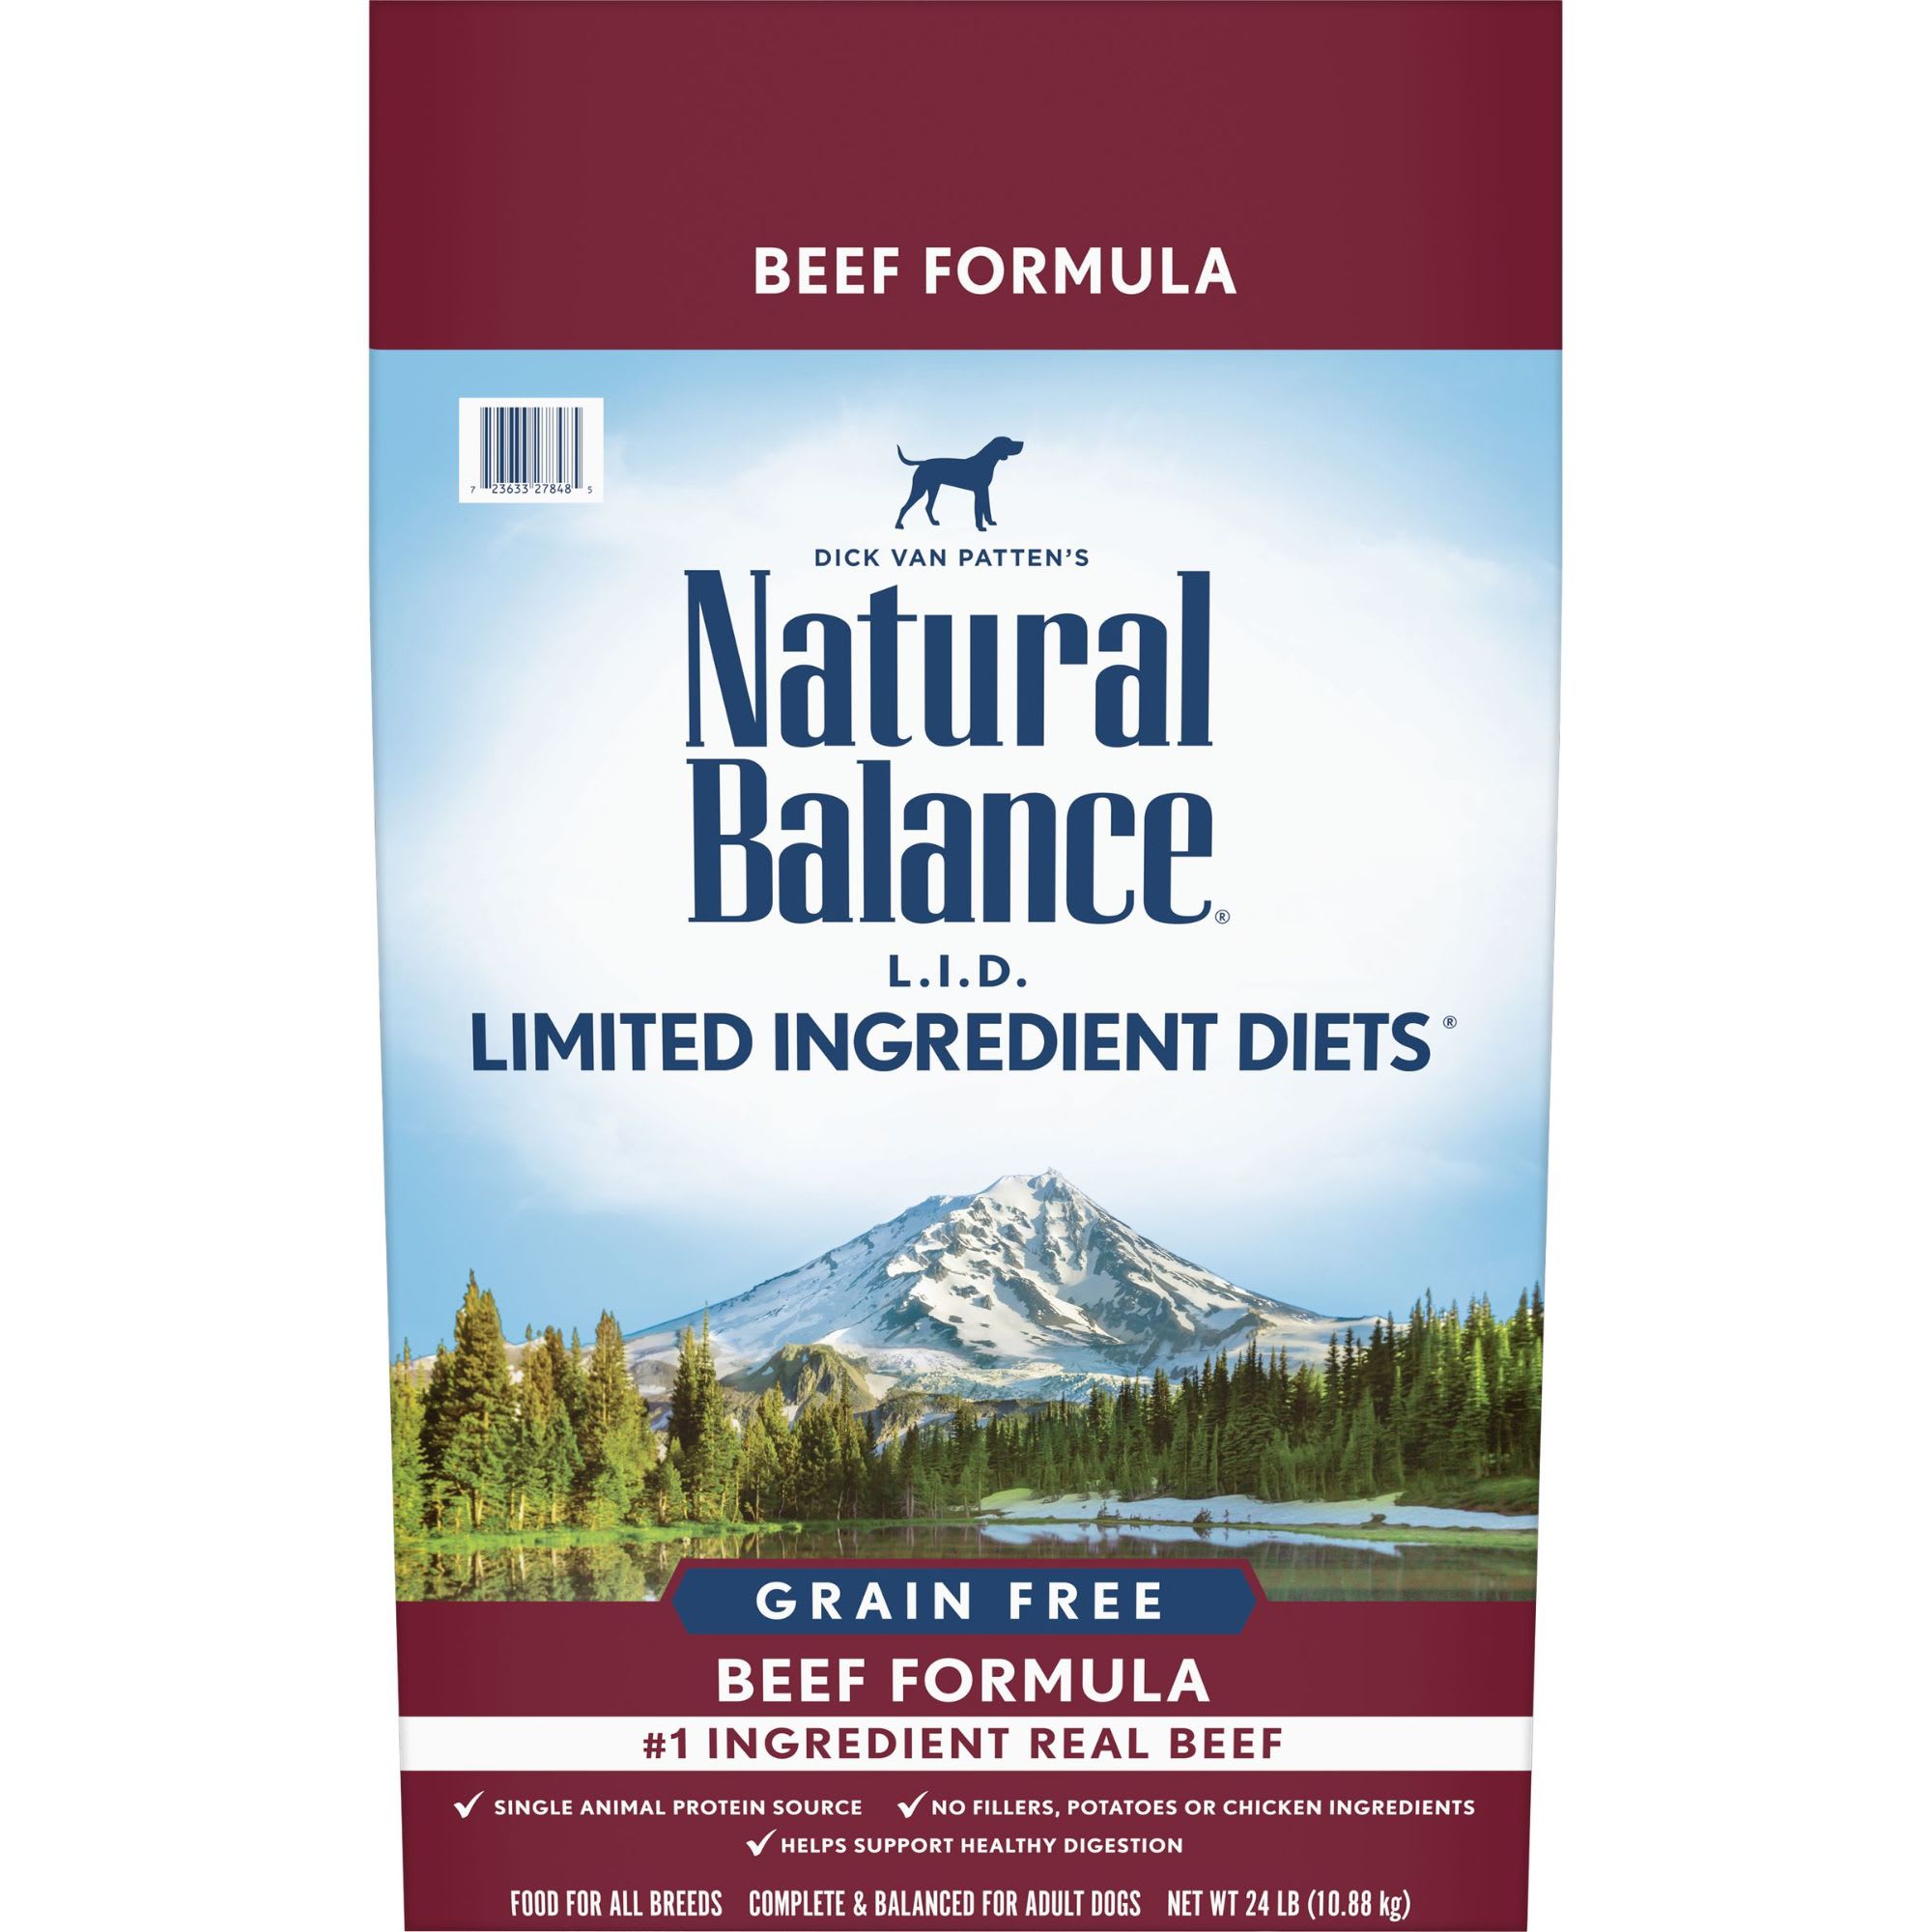 Natural Balance Limited Ingredient Diet 